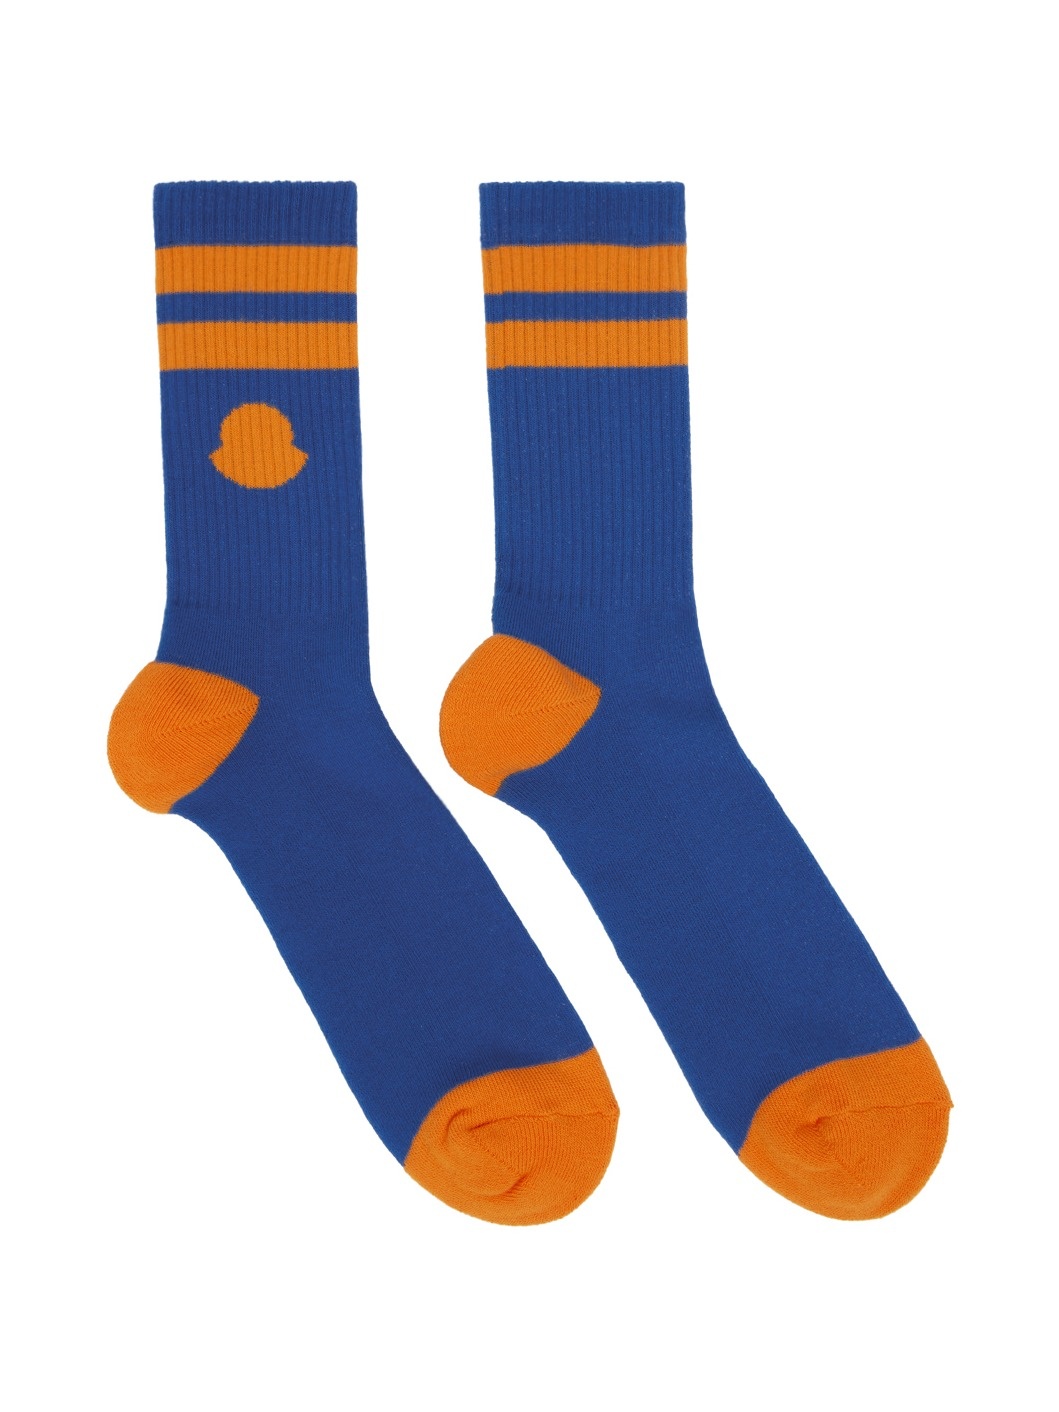 Blue & Orange Striped Socks - 1